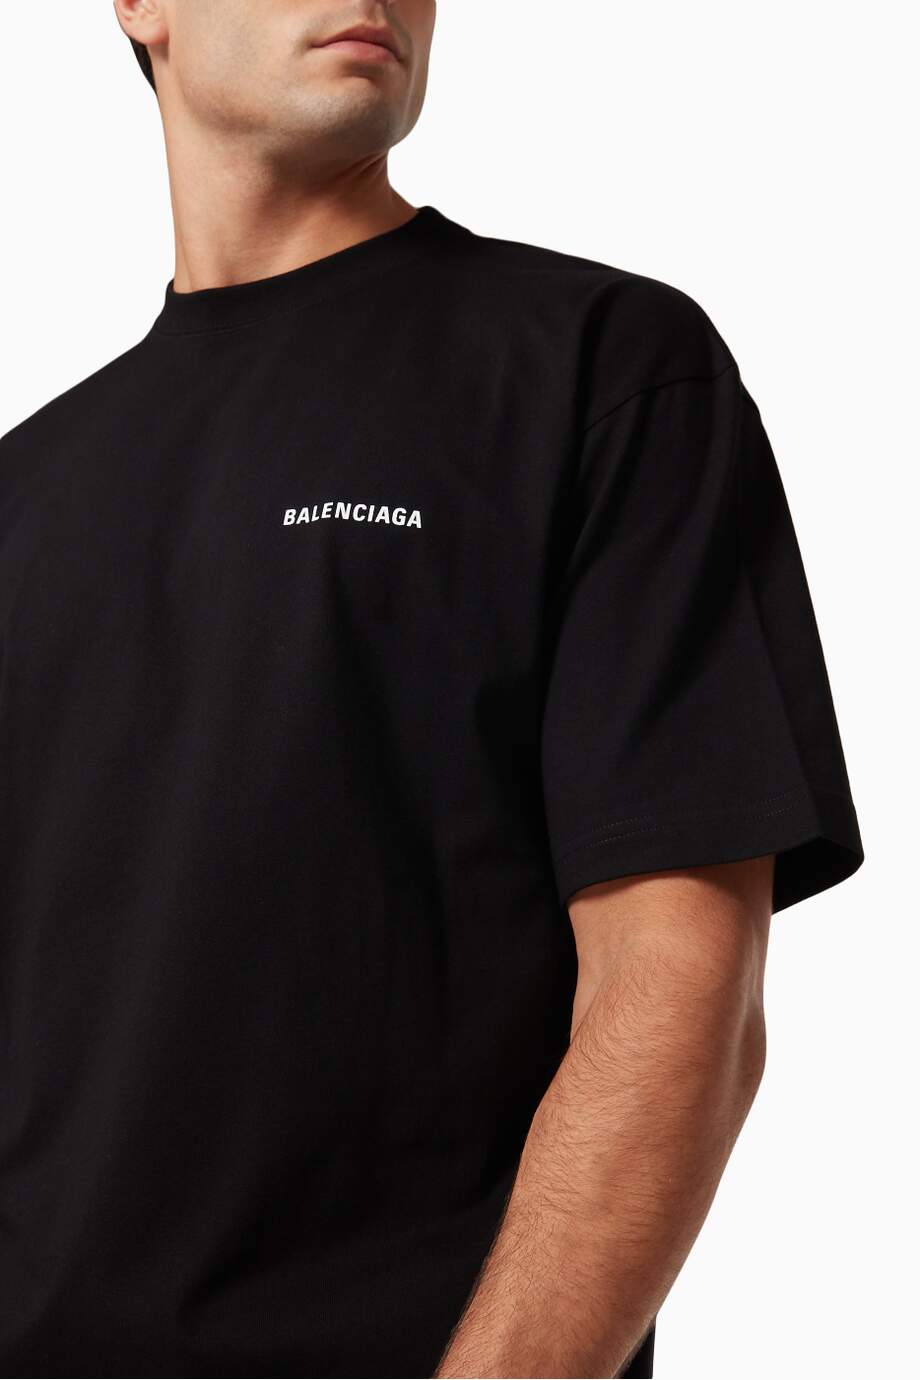 BALENCIAGANEW Logo Medium Fit T-shirt in Cotton Jersey